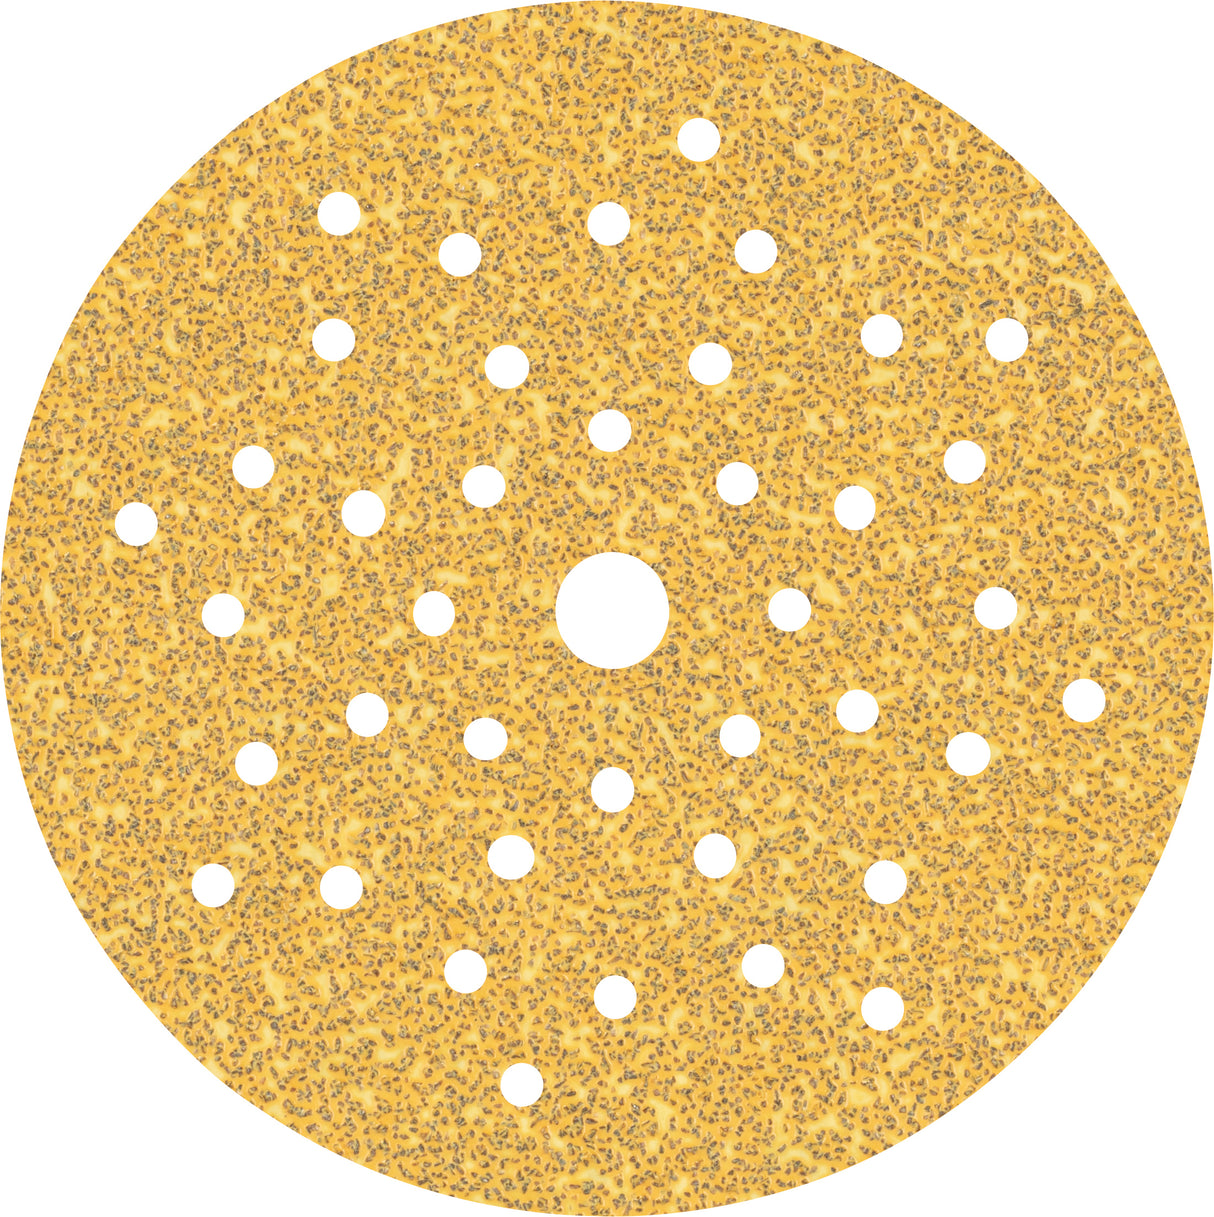 Bosch Professional Expert C470 Sandpaper - 125mm Random Orbital Sanders, Multihole, G 40, 50-pc